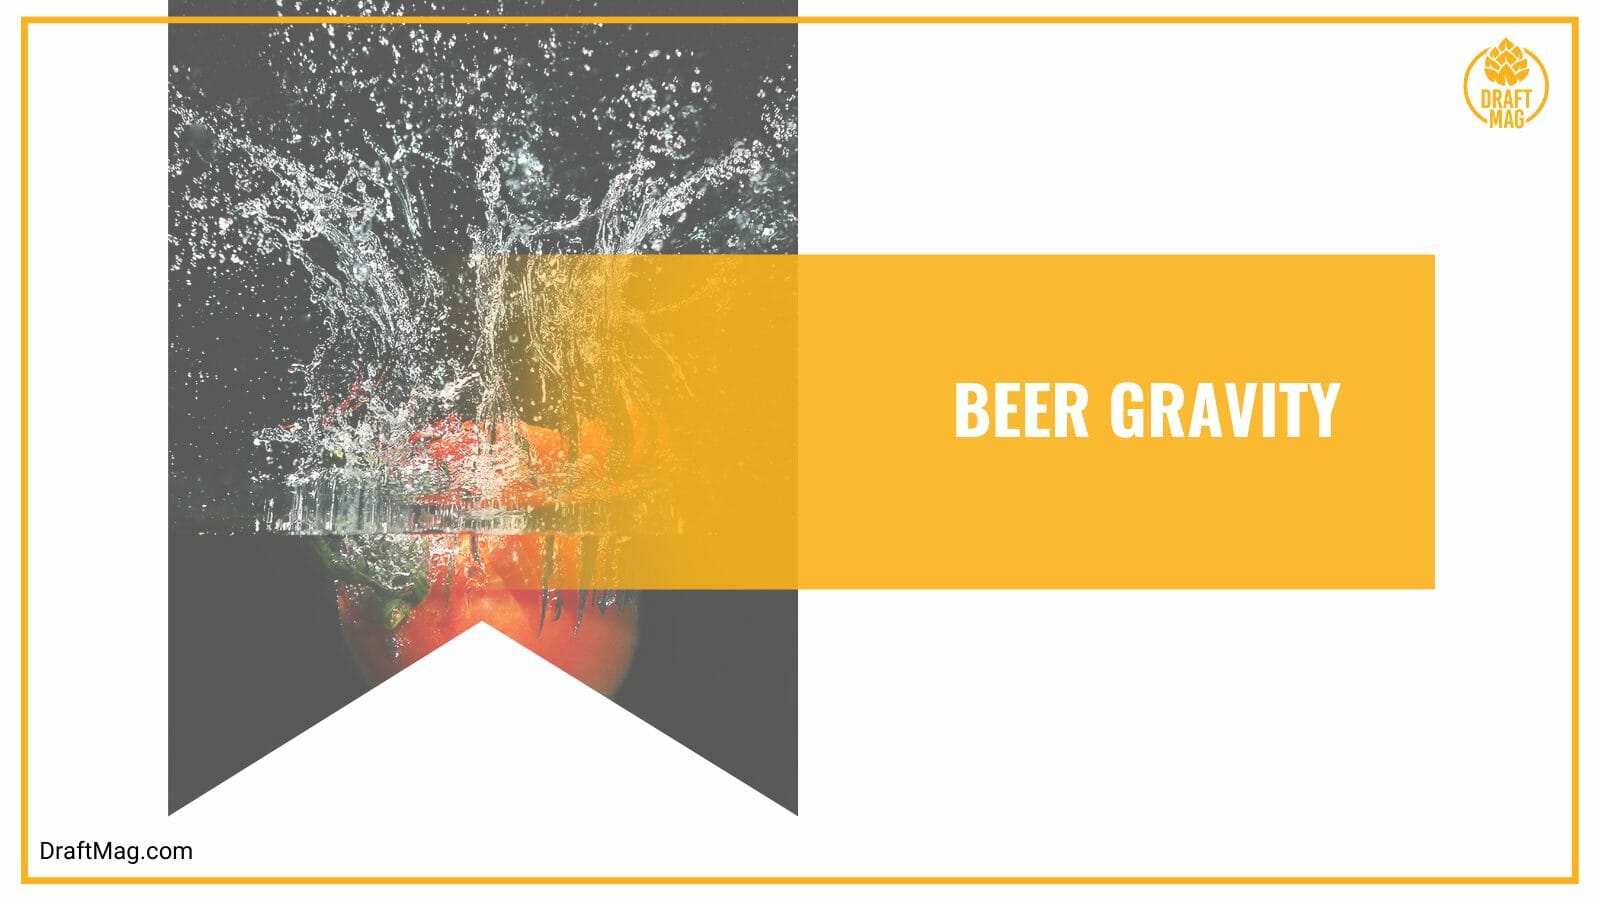 Beer gravity indicates sugar content